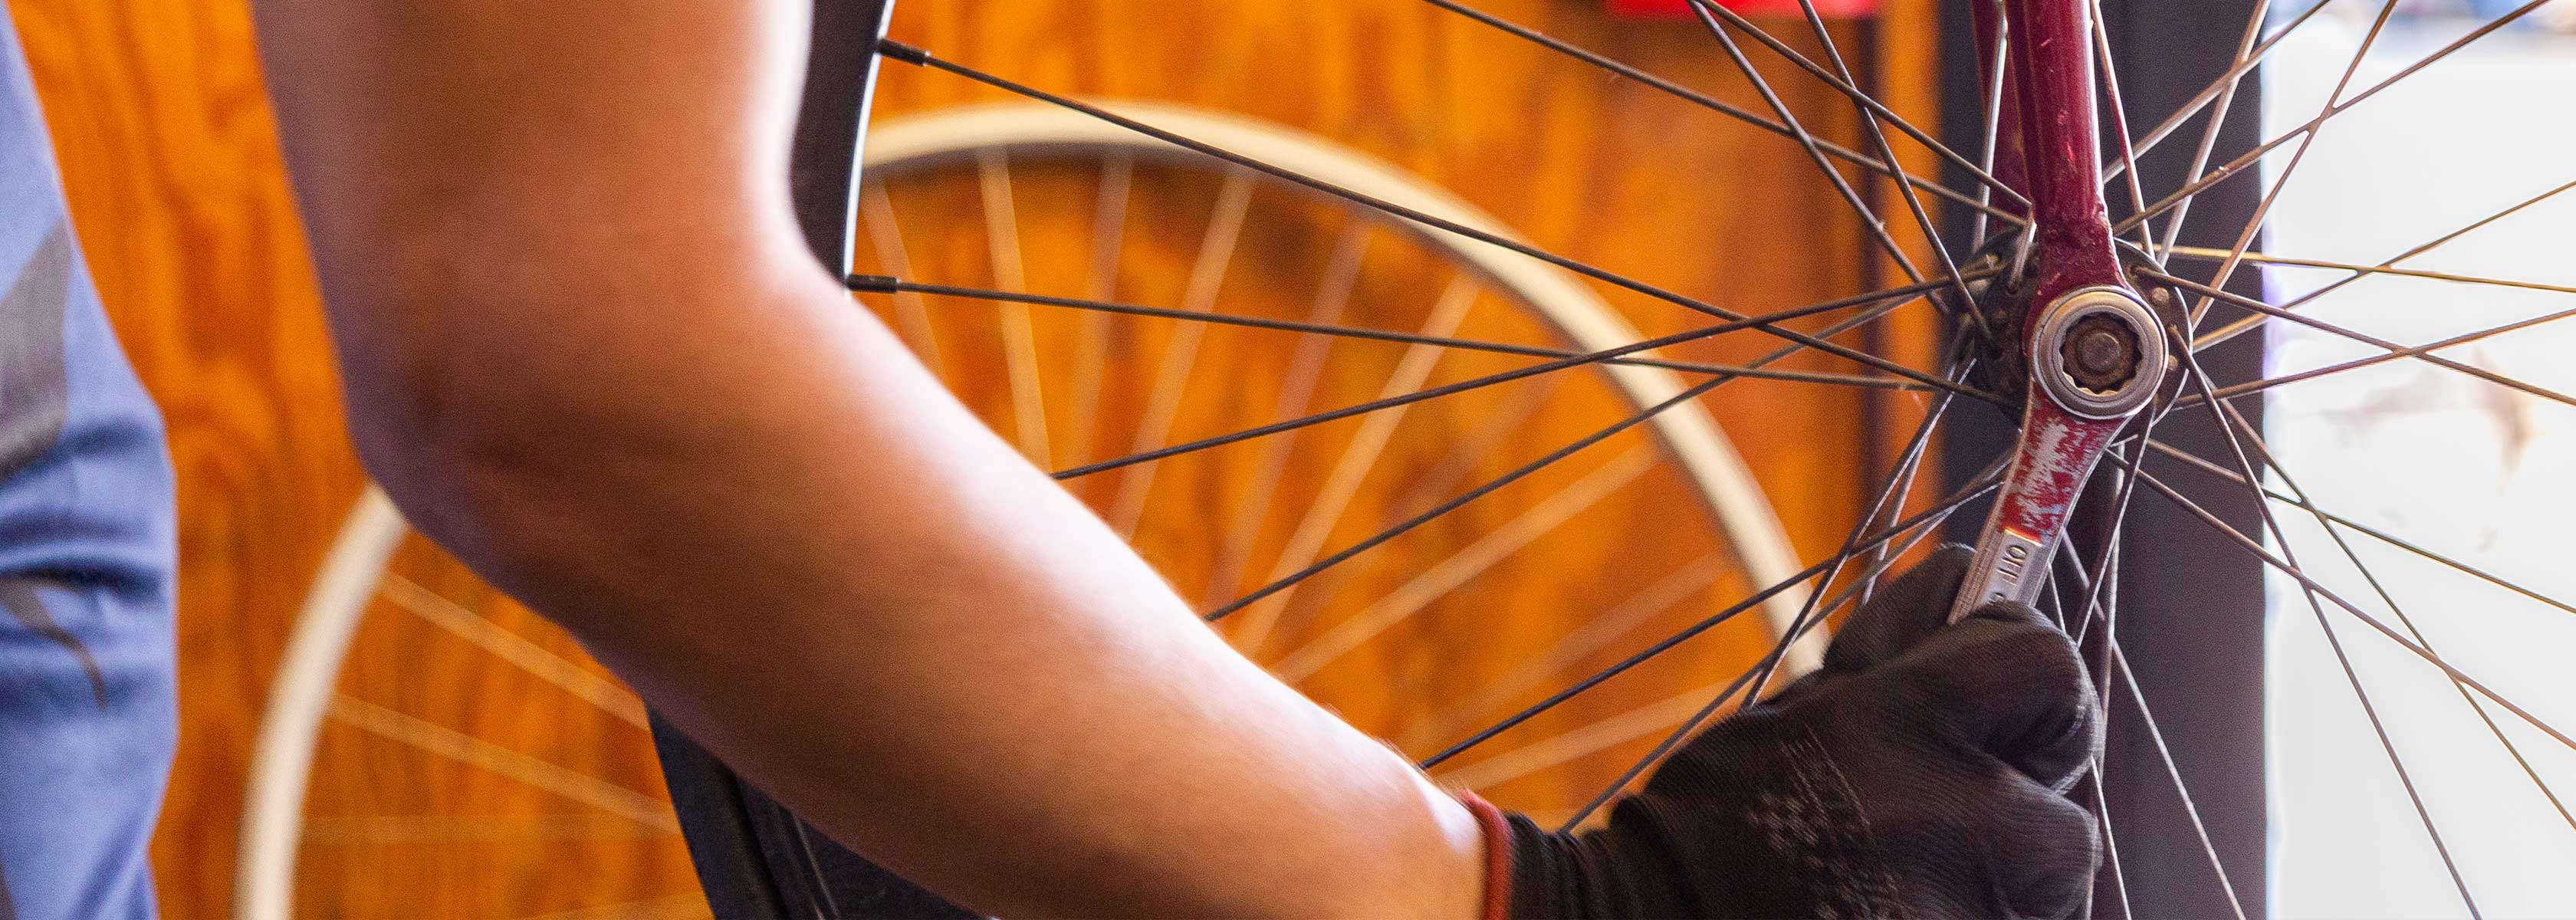 repairing a bike wheel